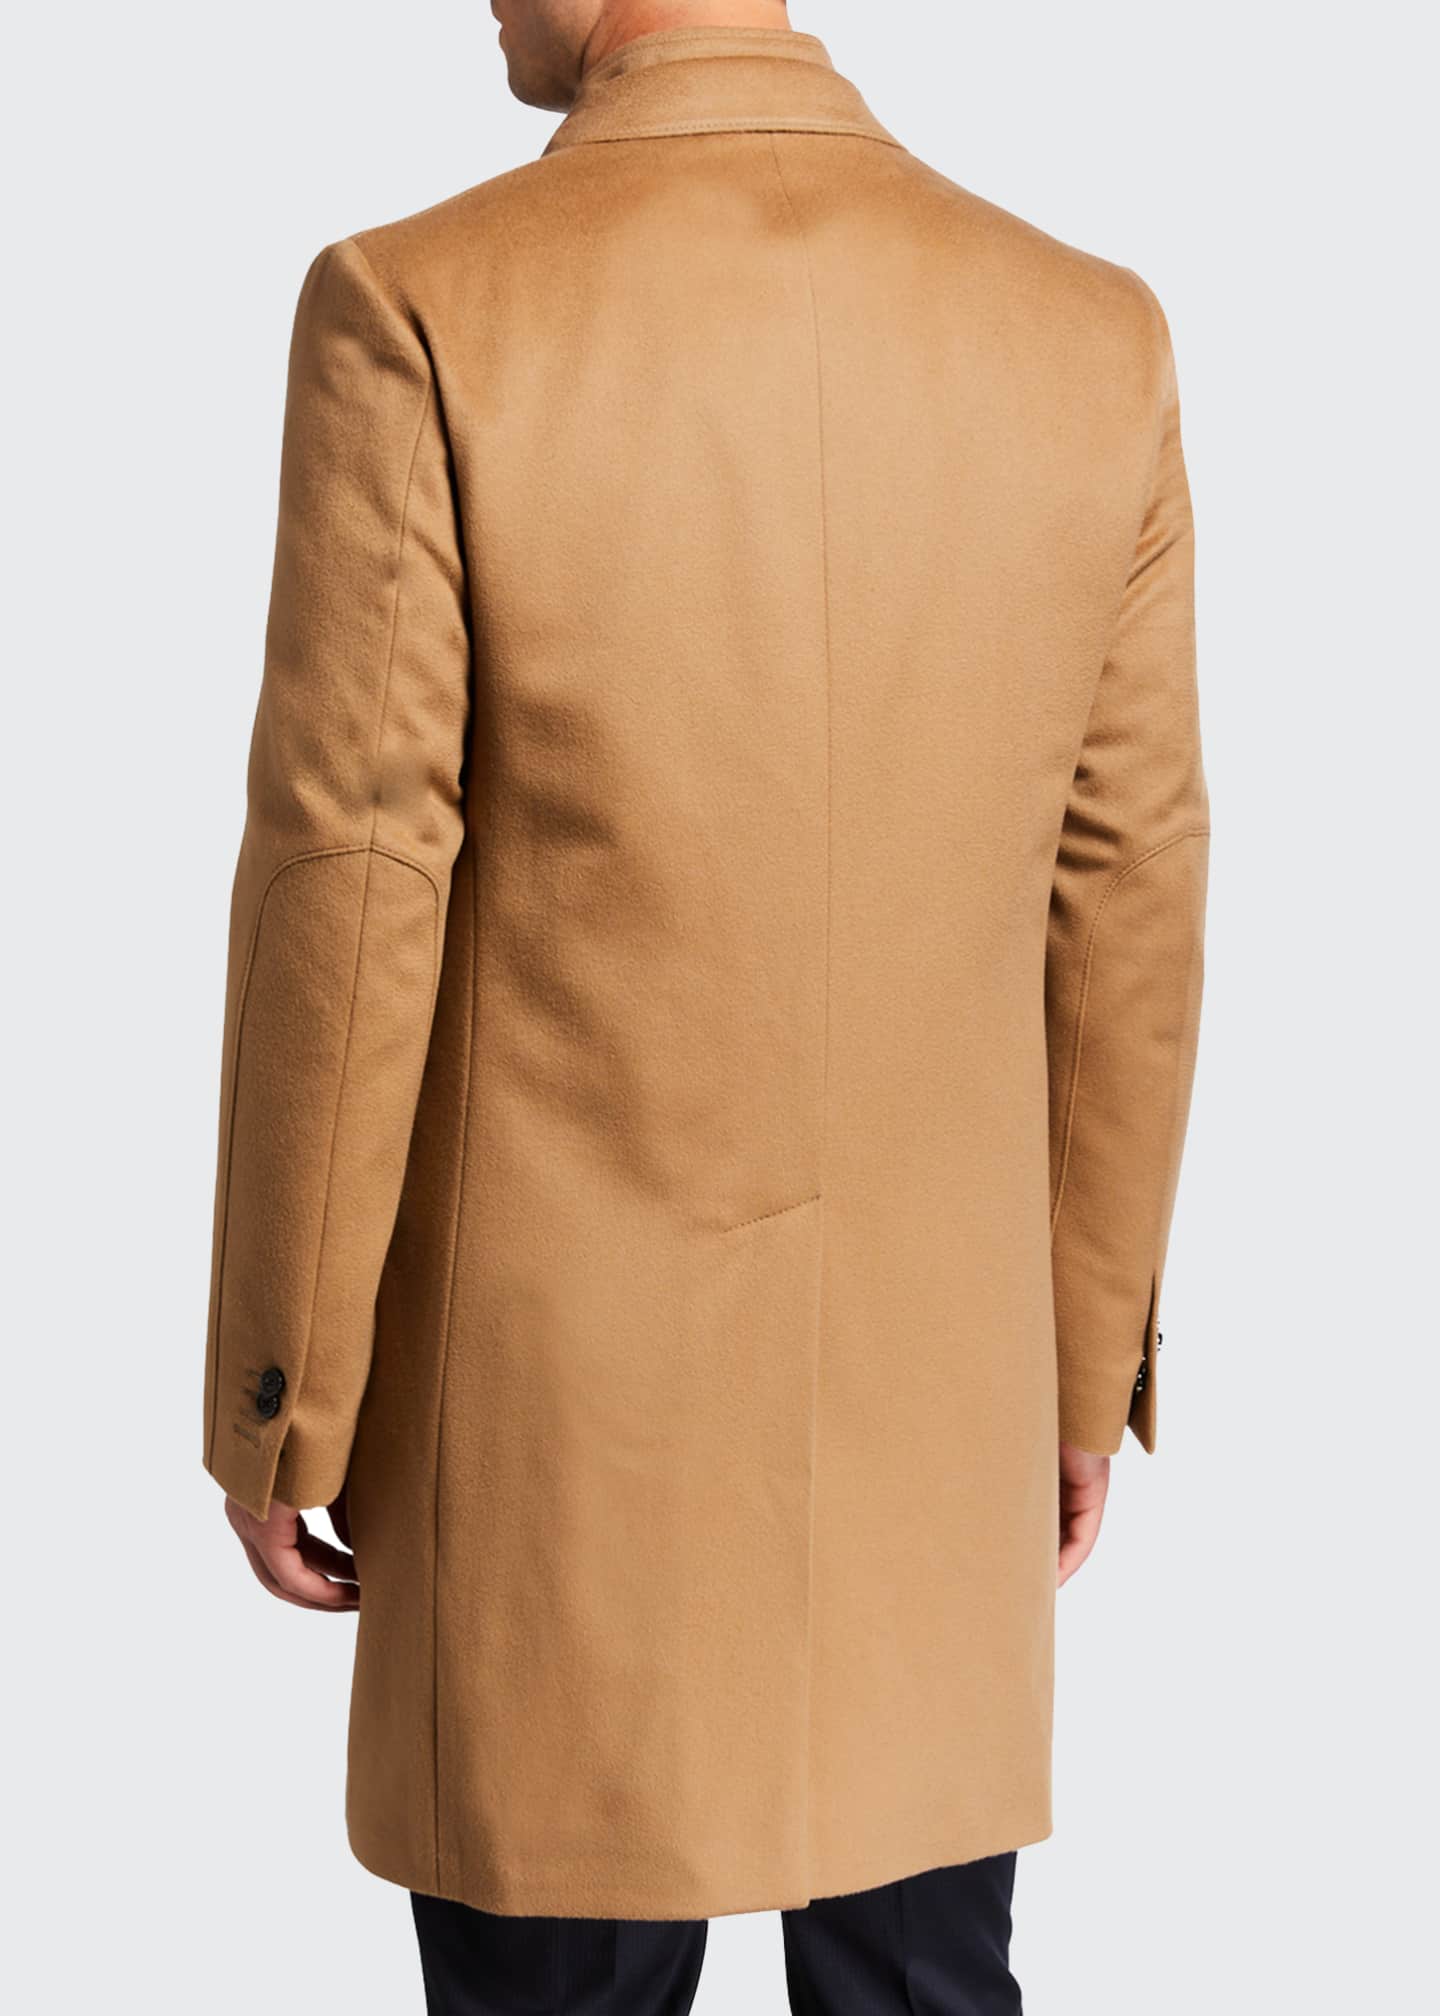 Corneliani Men's ID Top Coat w/ Removable Dickey - Bergdorf Goodman